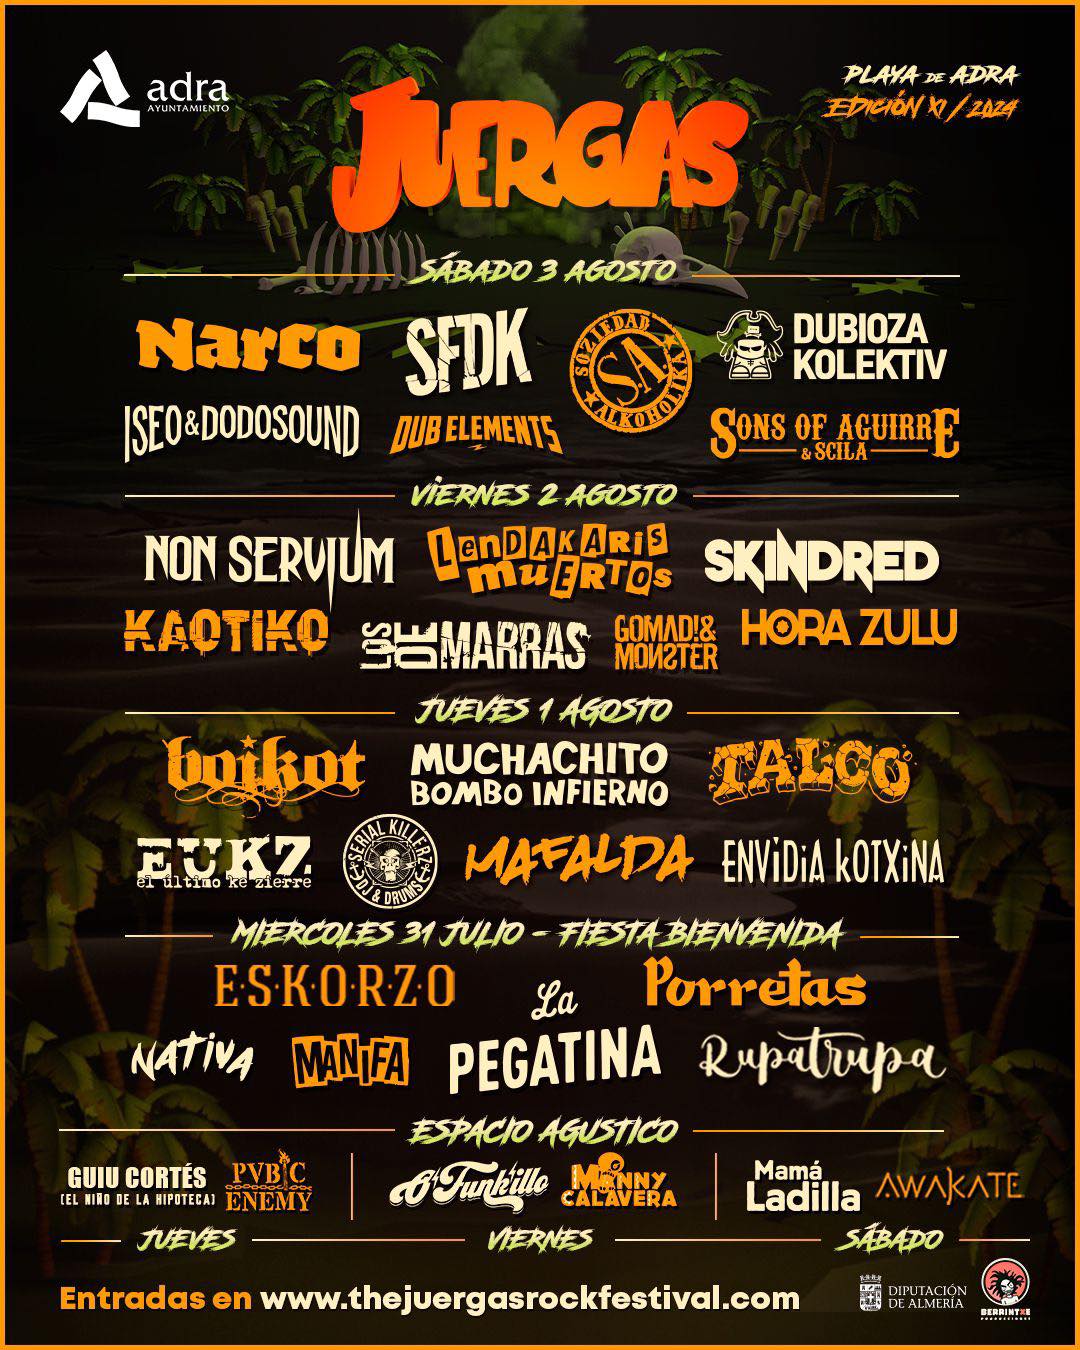 The Juergas Rock Festival